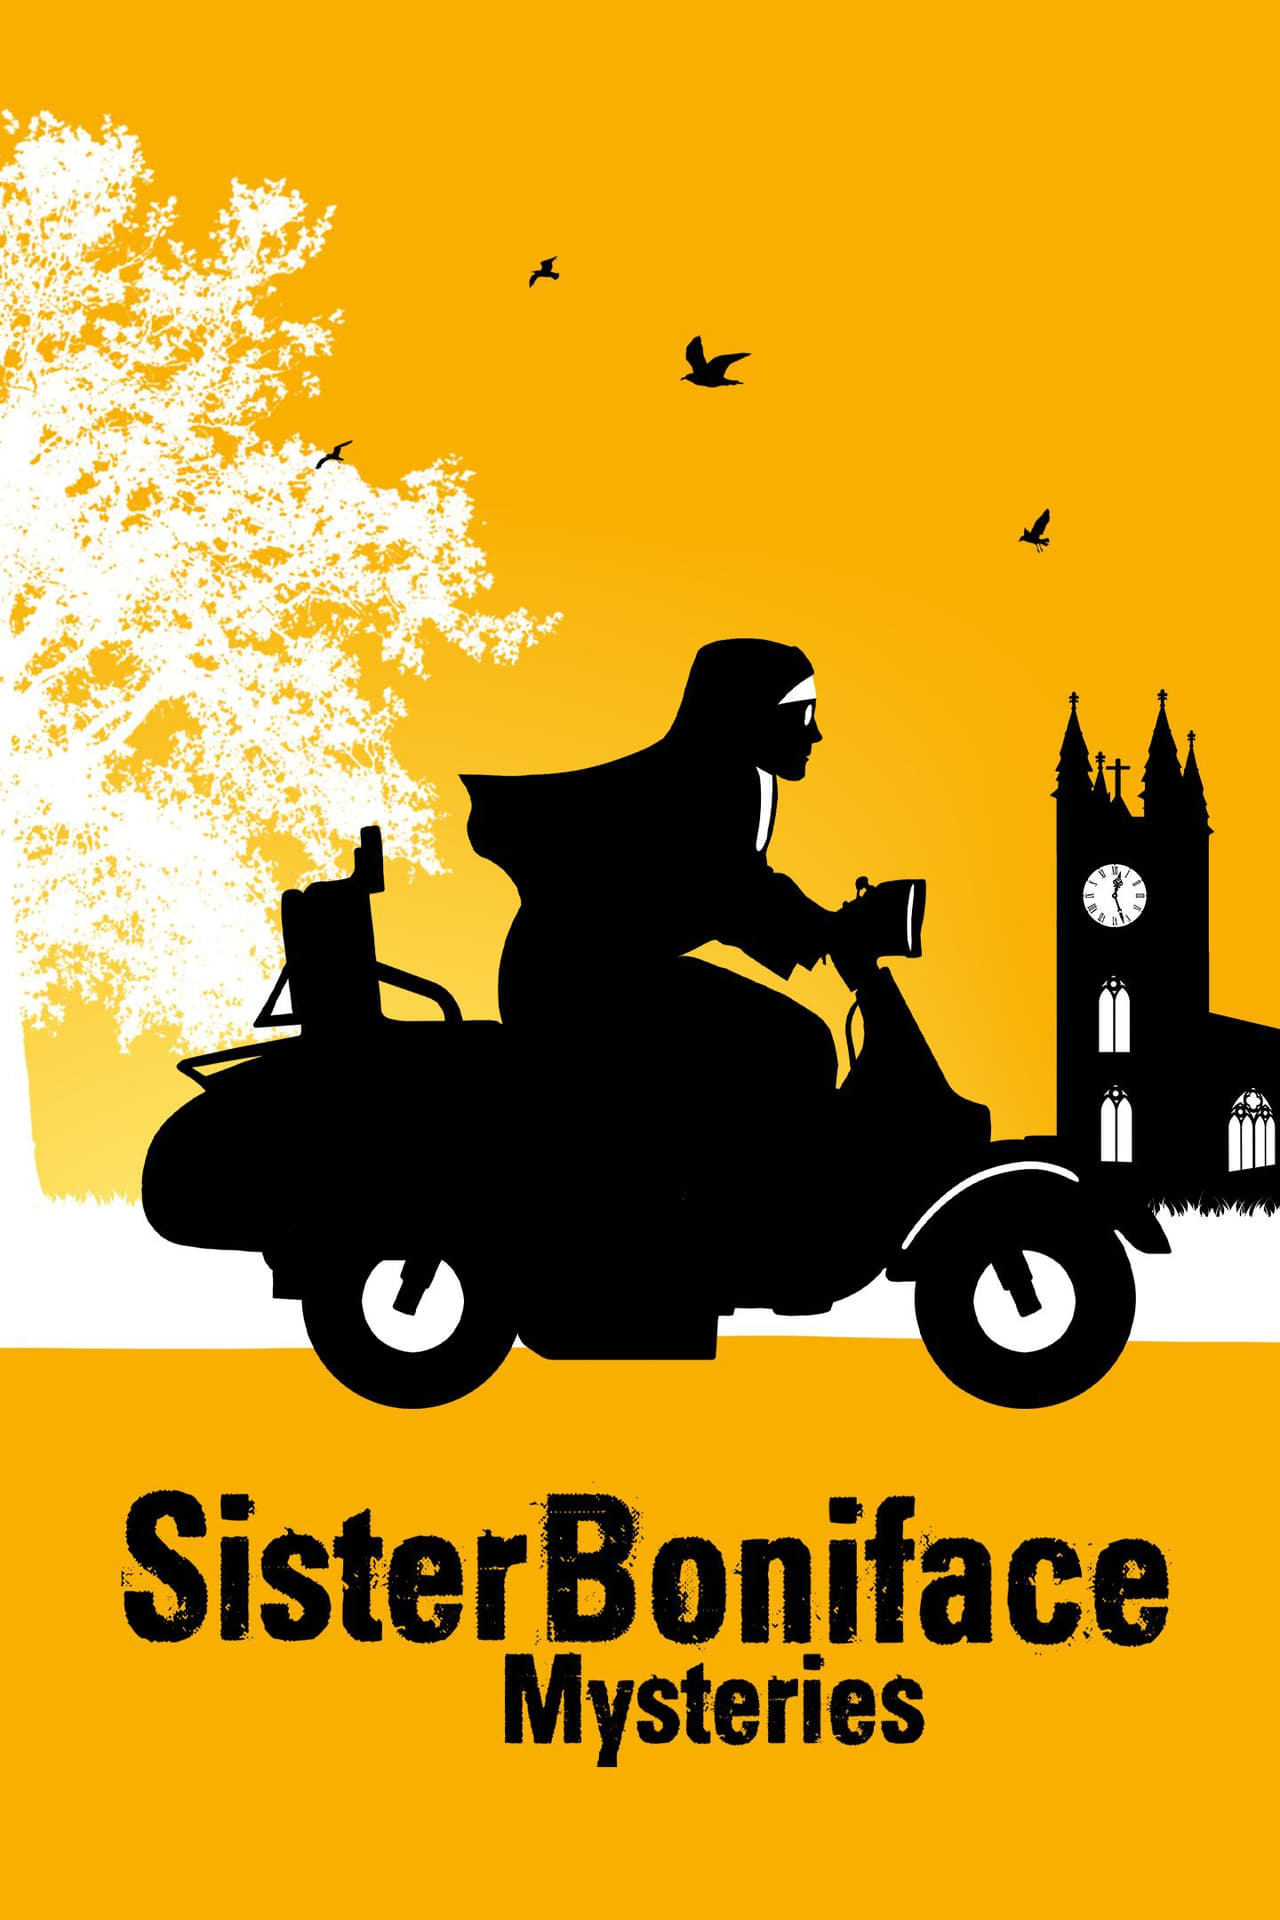 Sister Boniface Mysteries (season 1)